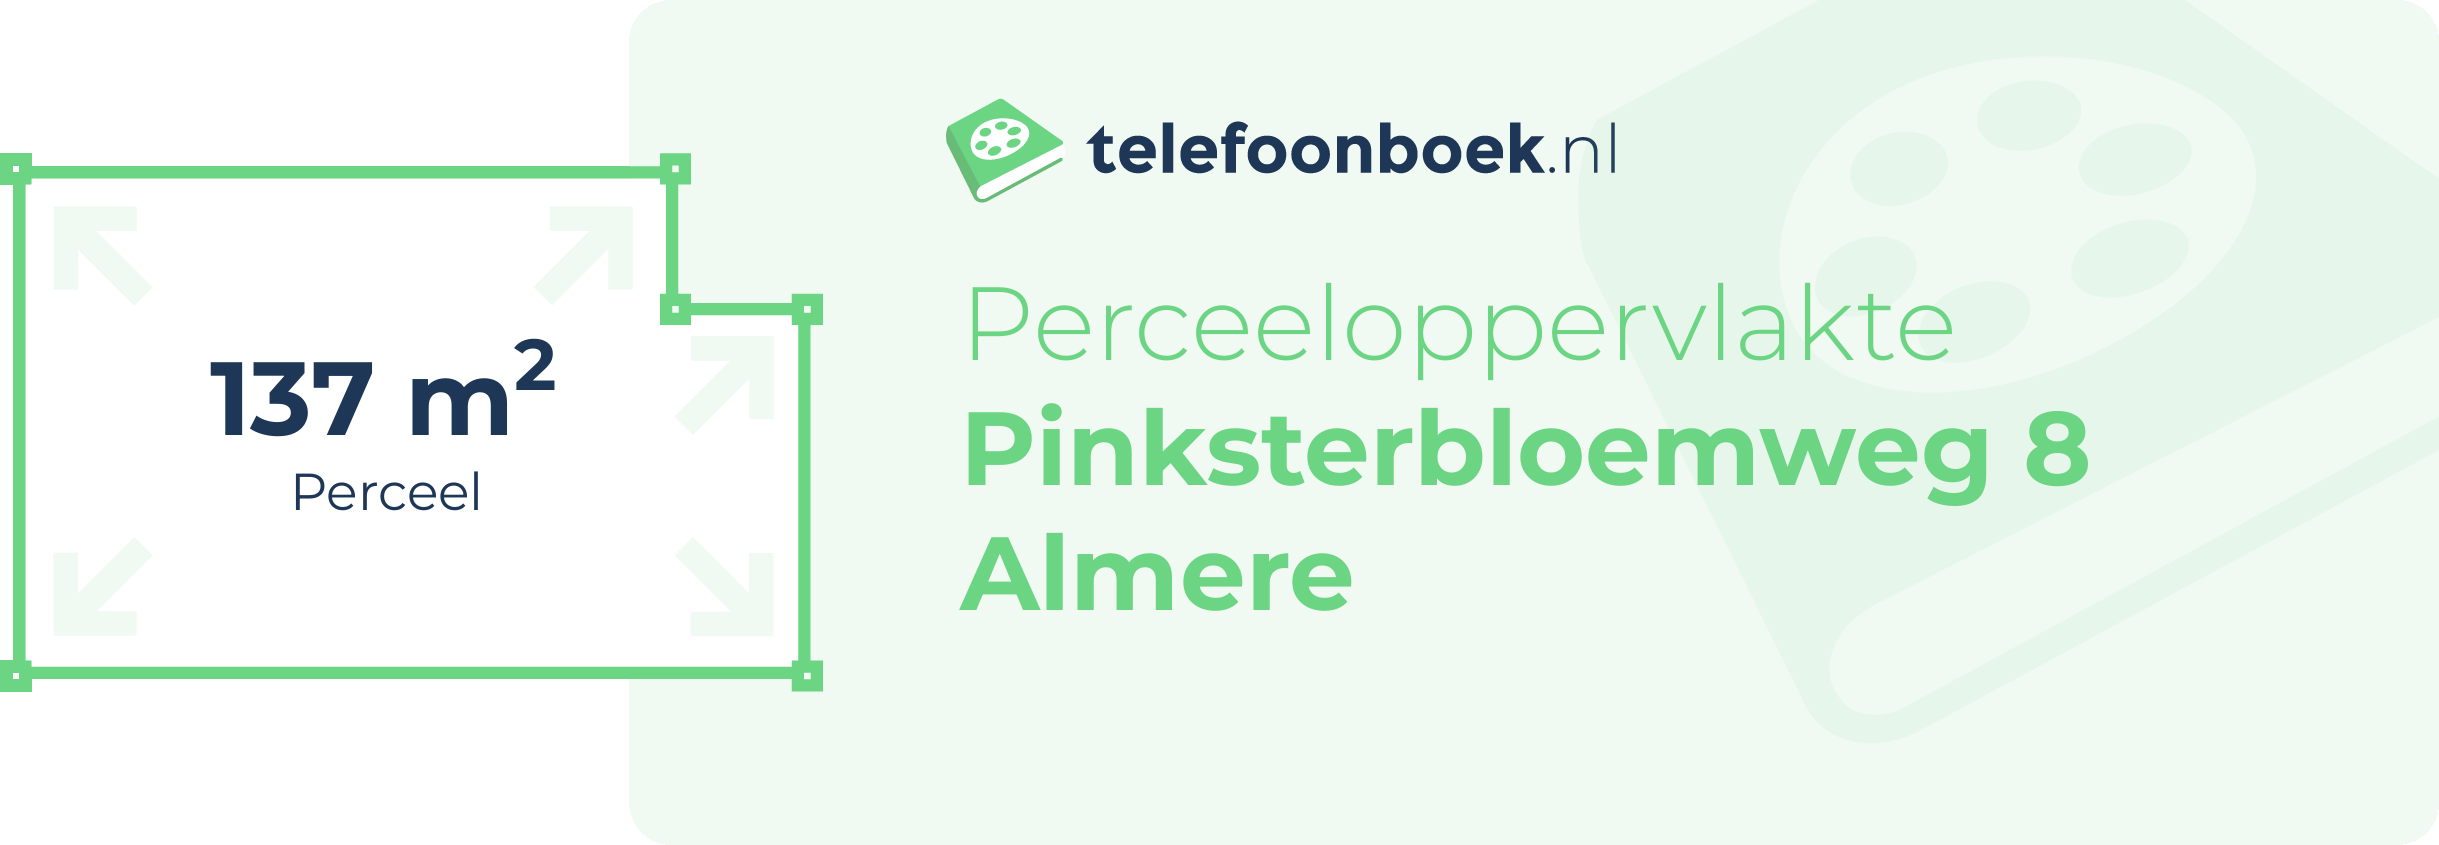 Perceeloppervlakte Pinksterbloemweg 8 Almere